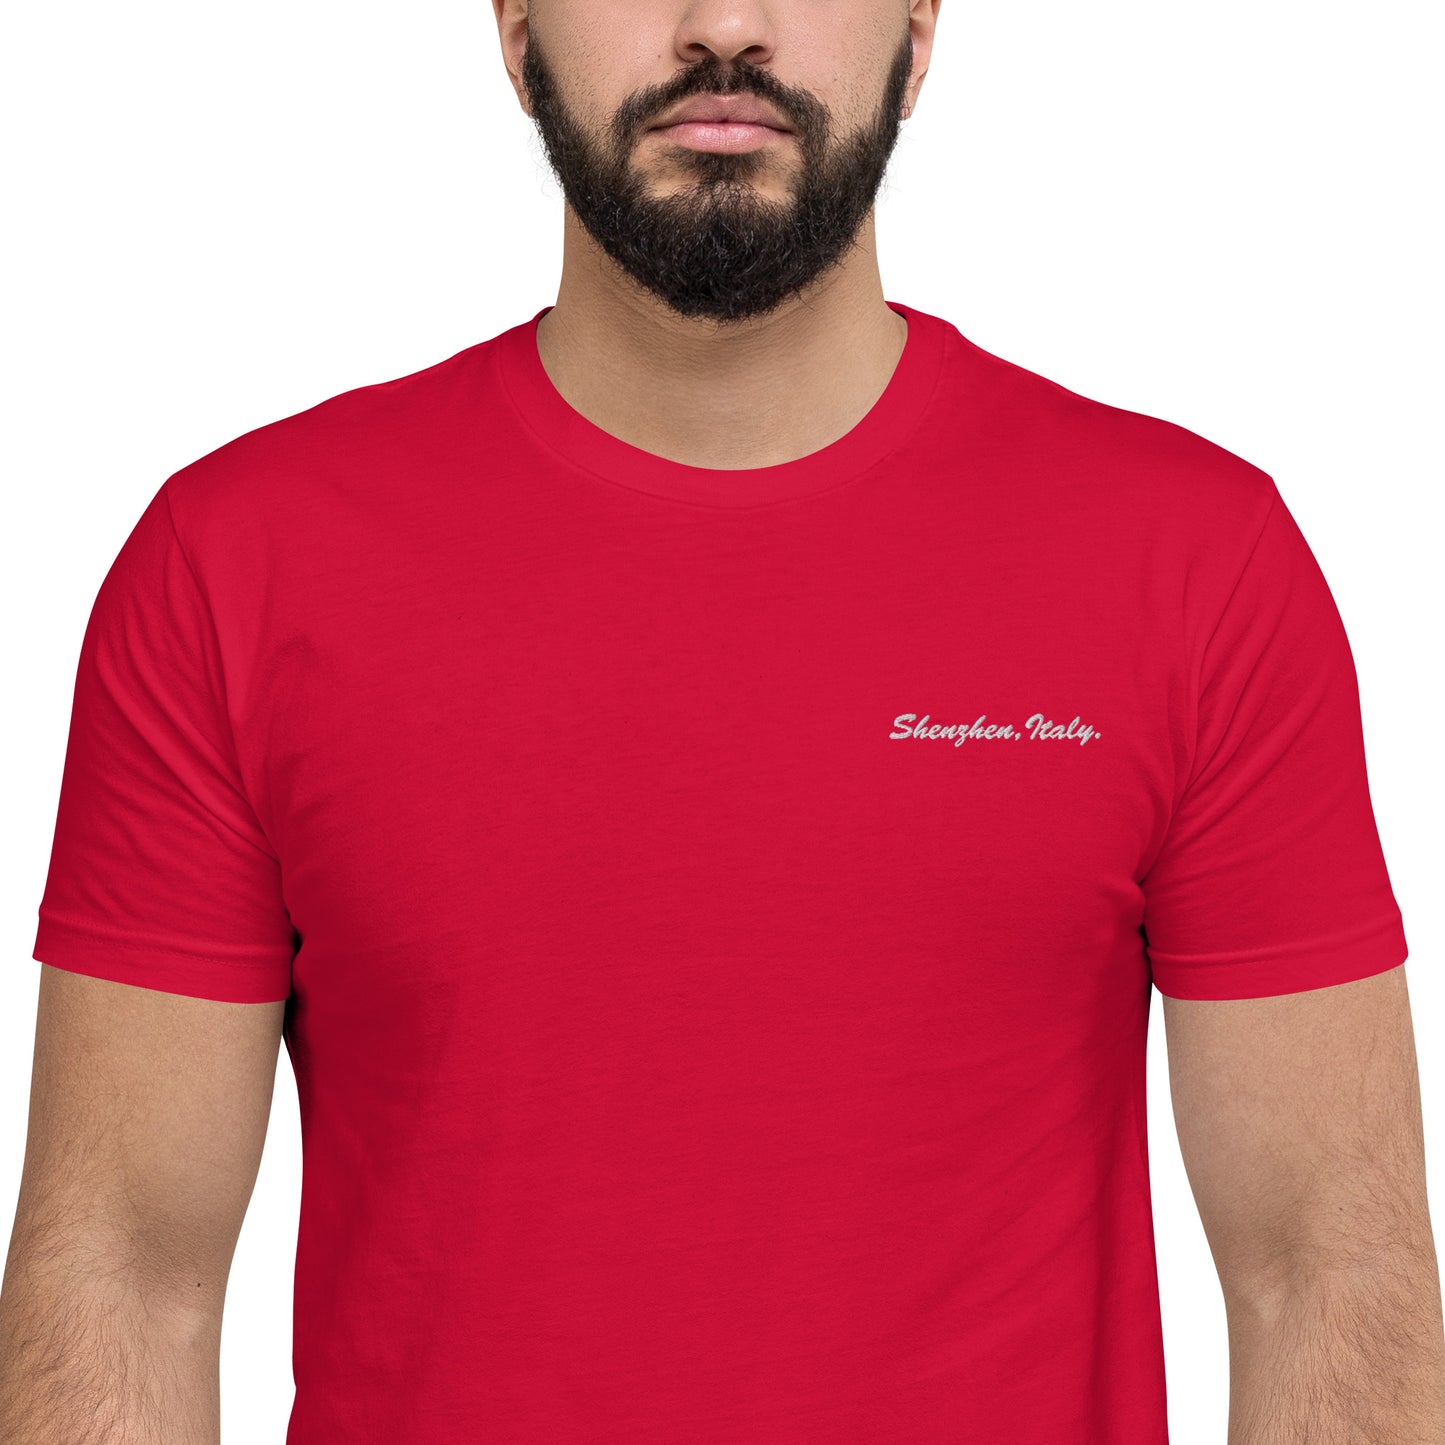 Shenzhen, Italy Premium Fitted T-shirt